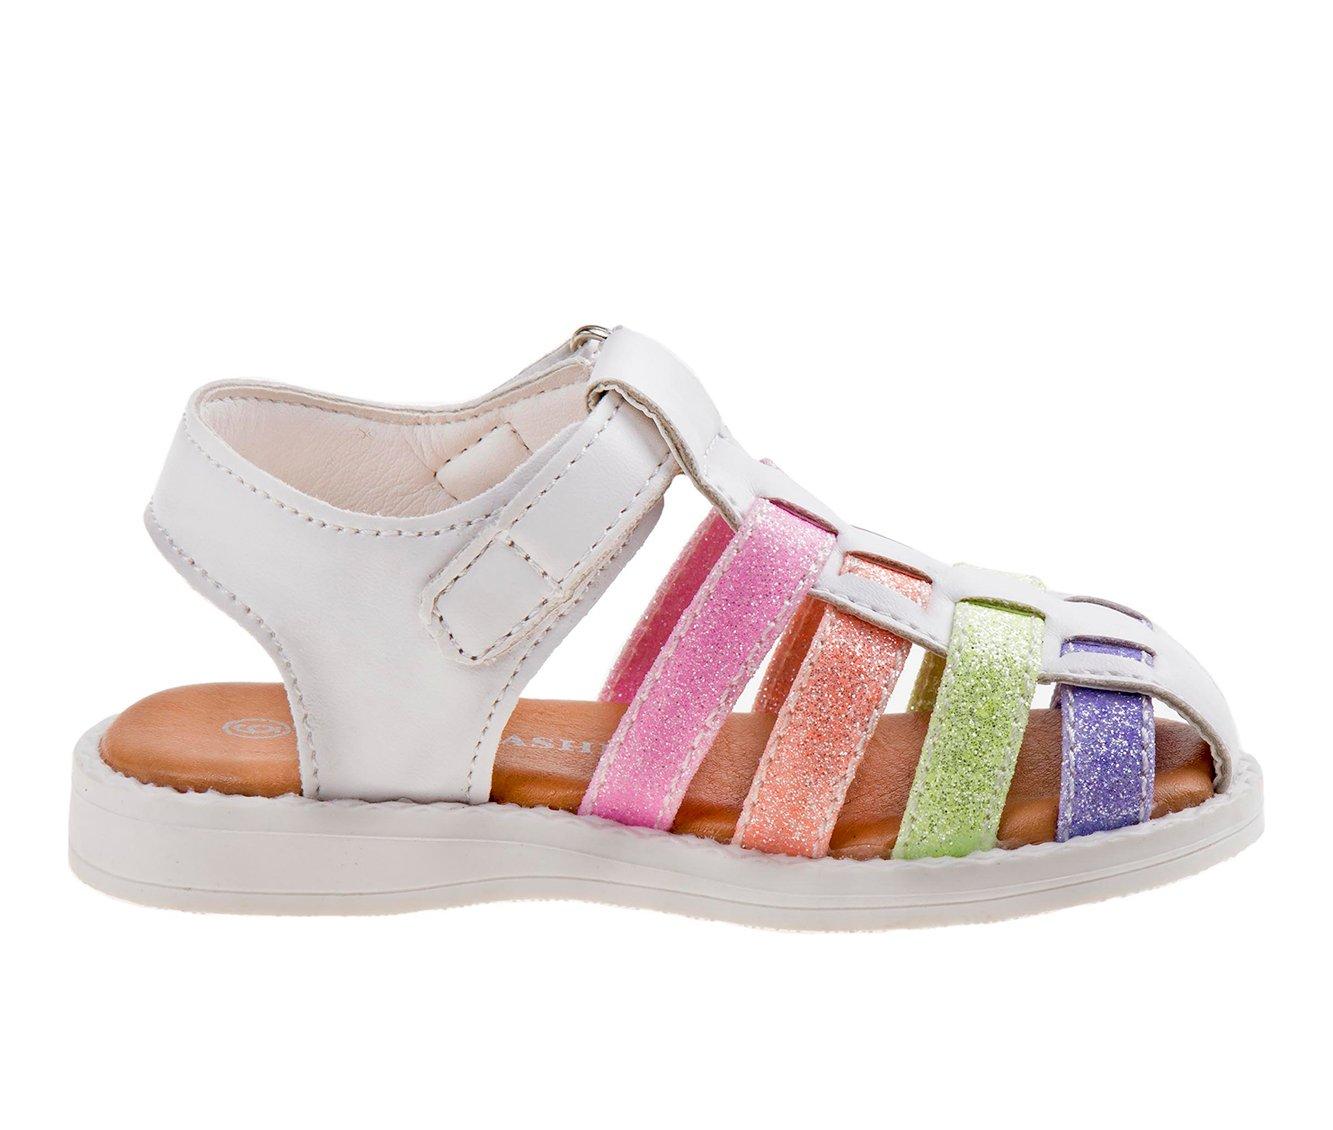 Girls' Laura Ashley Toddler & Little Kid 25955C Closed Toe Sandals